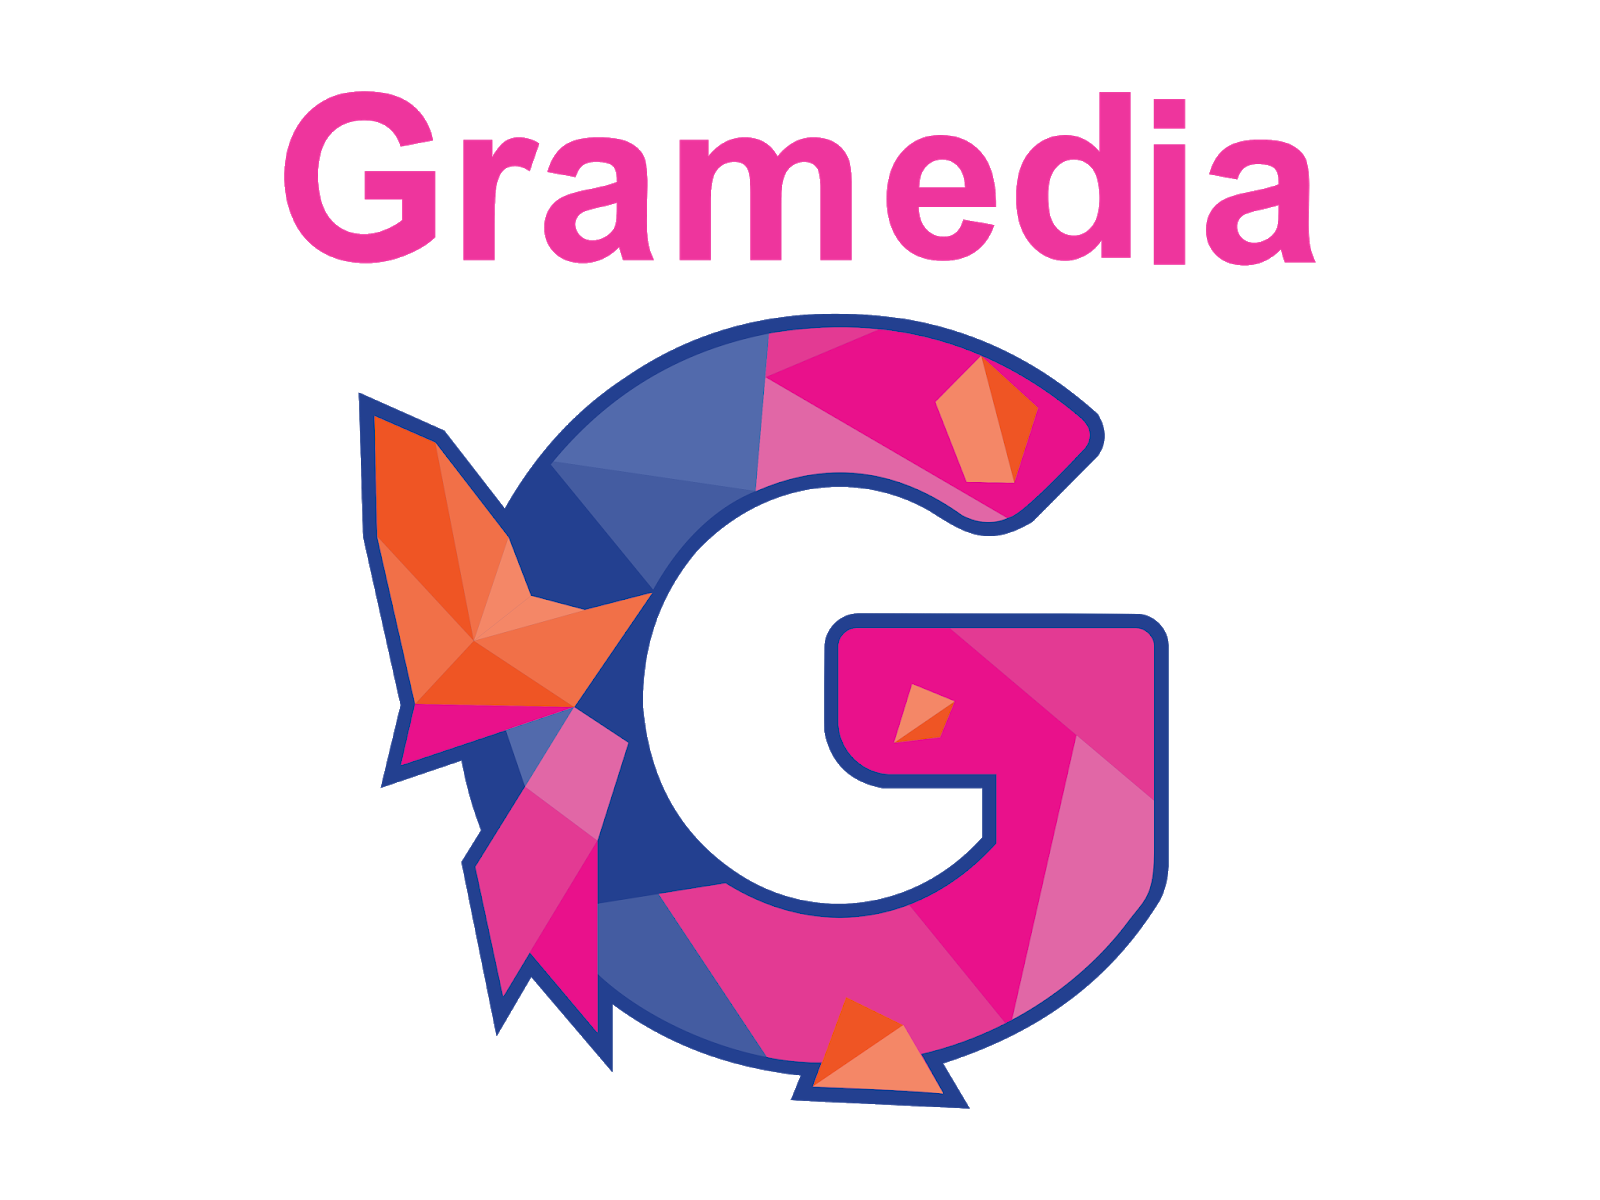 Download Logo Gramediacdr - KibrisPDR